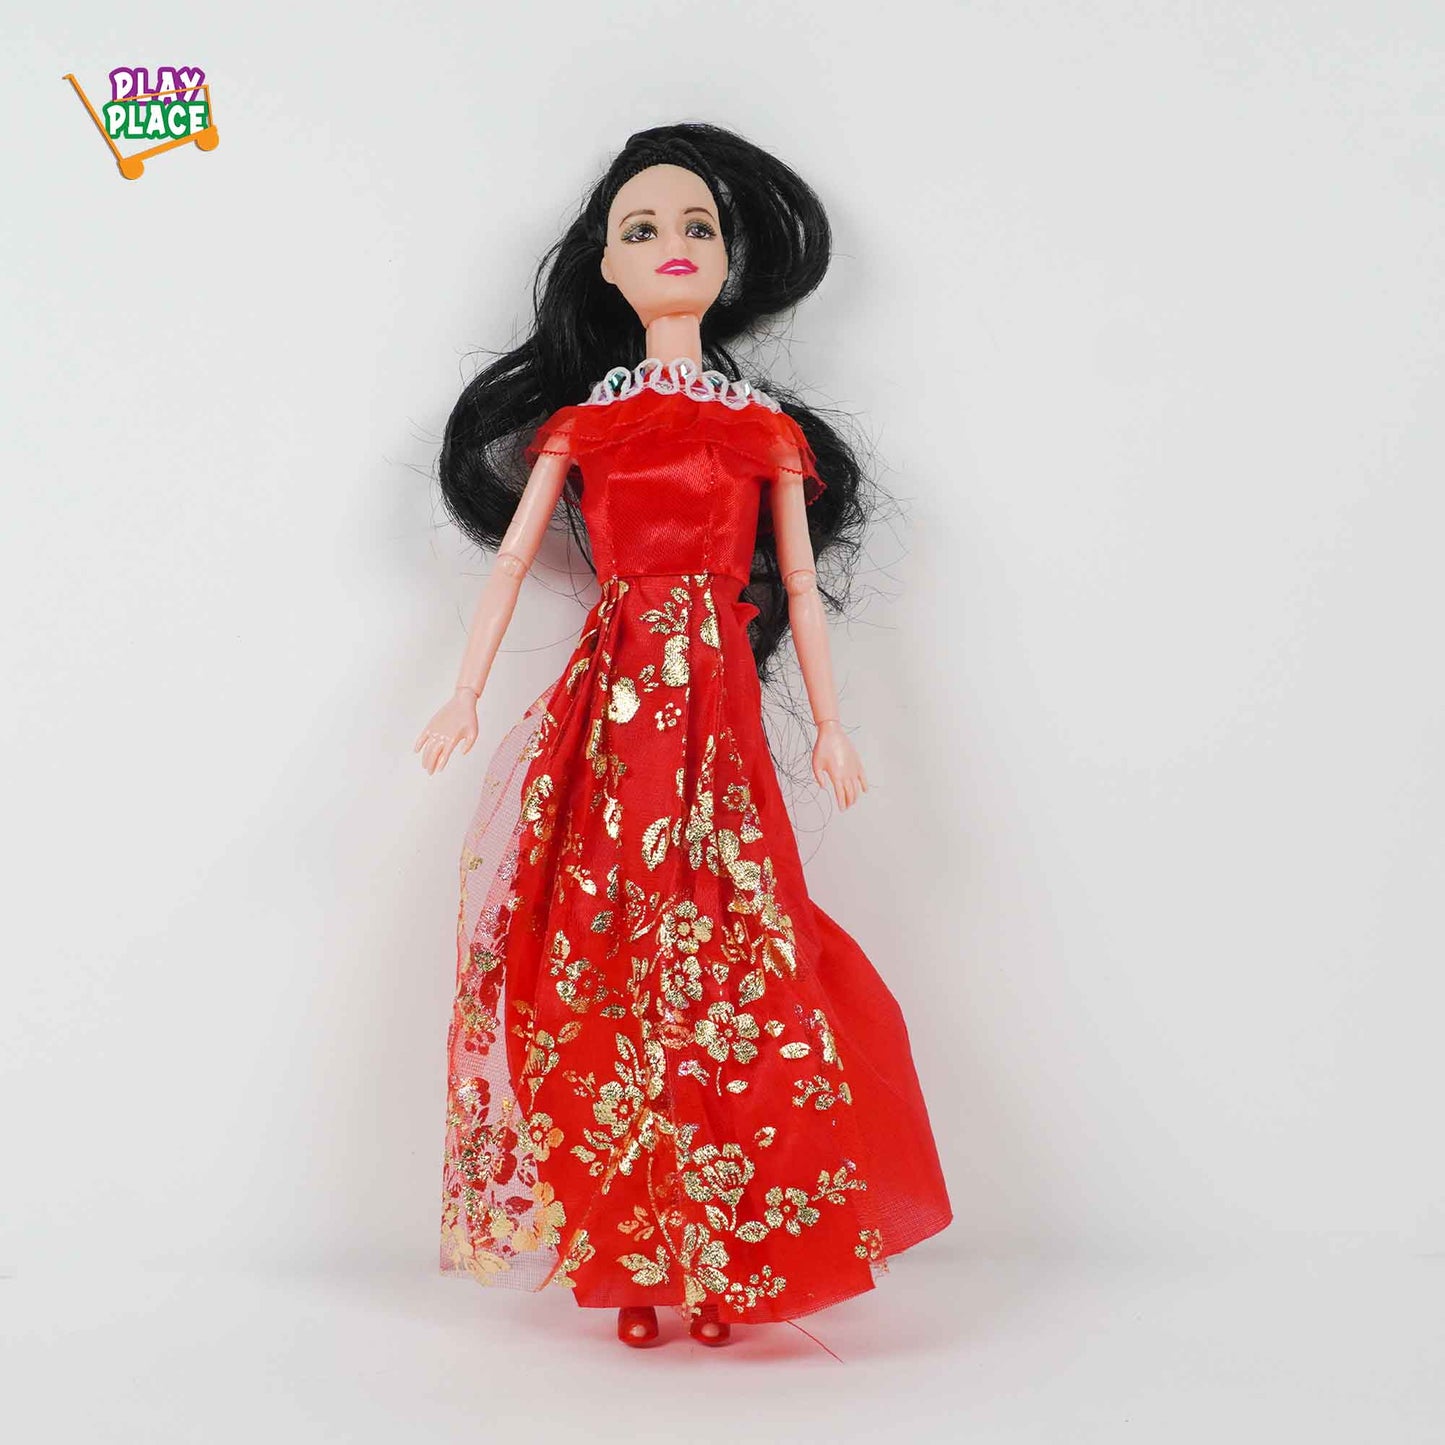 Fashion Girl ; Red Dress Doll